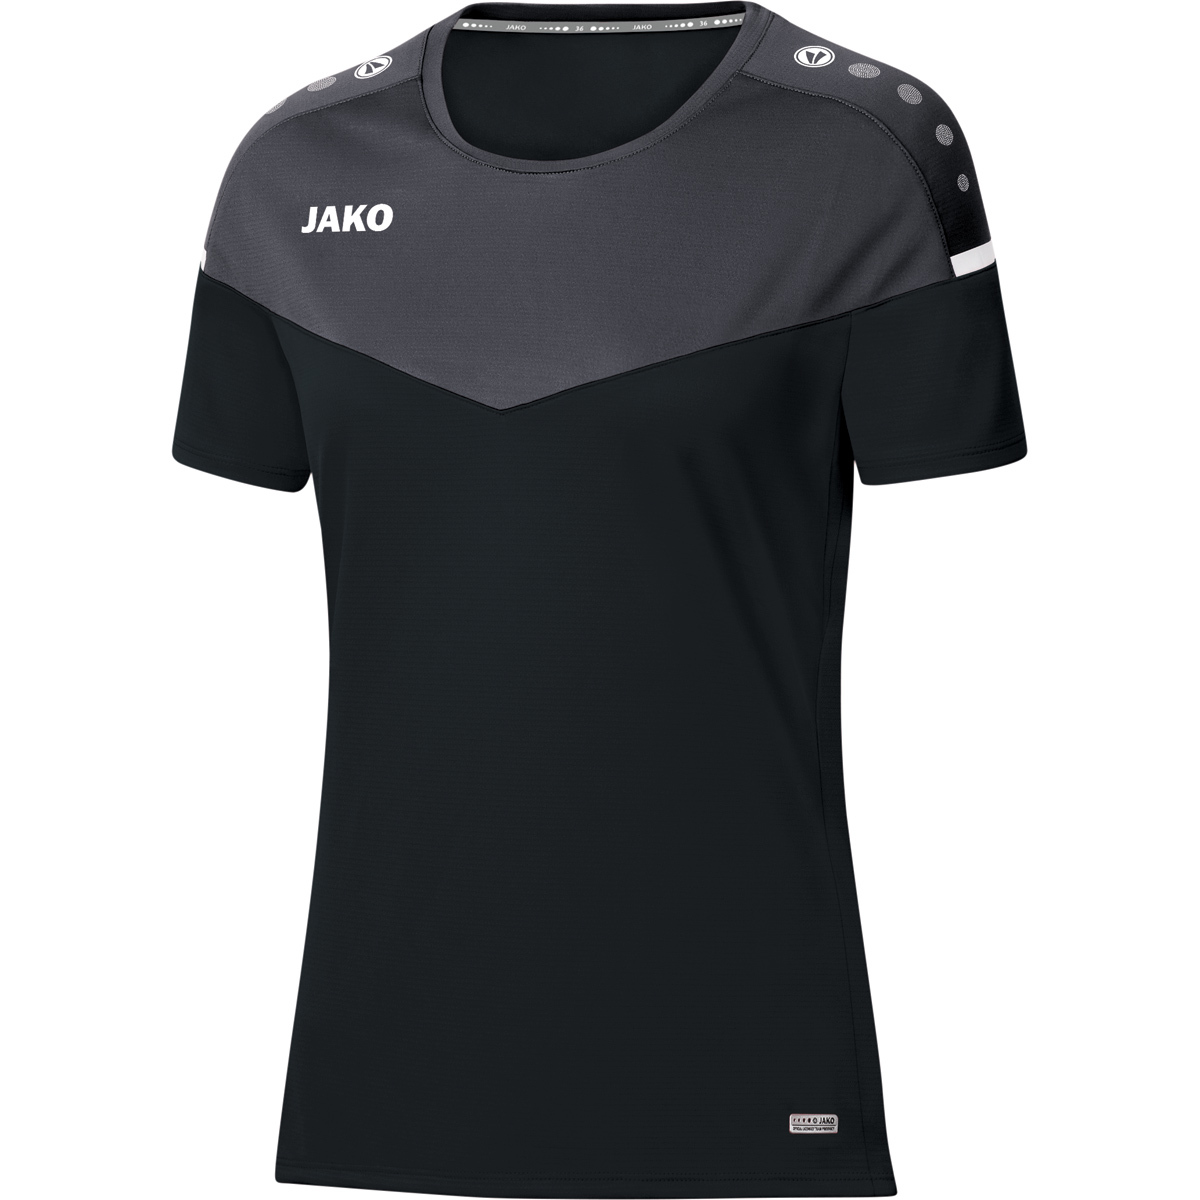 Champ JAKO Damen, 44, Gr. 6120 schwarz/anthrazit, 2.0 T-Shirt